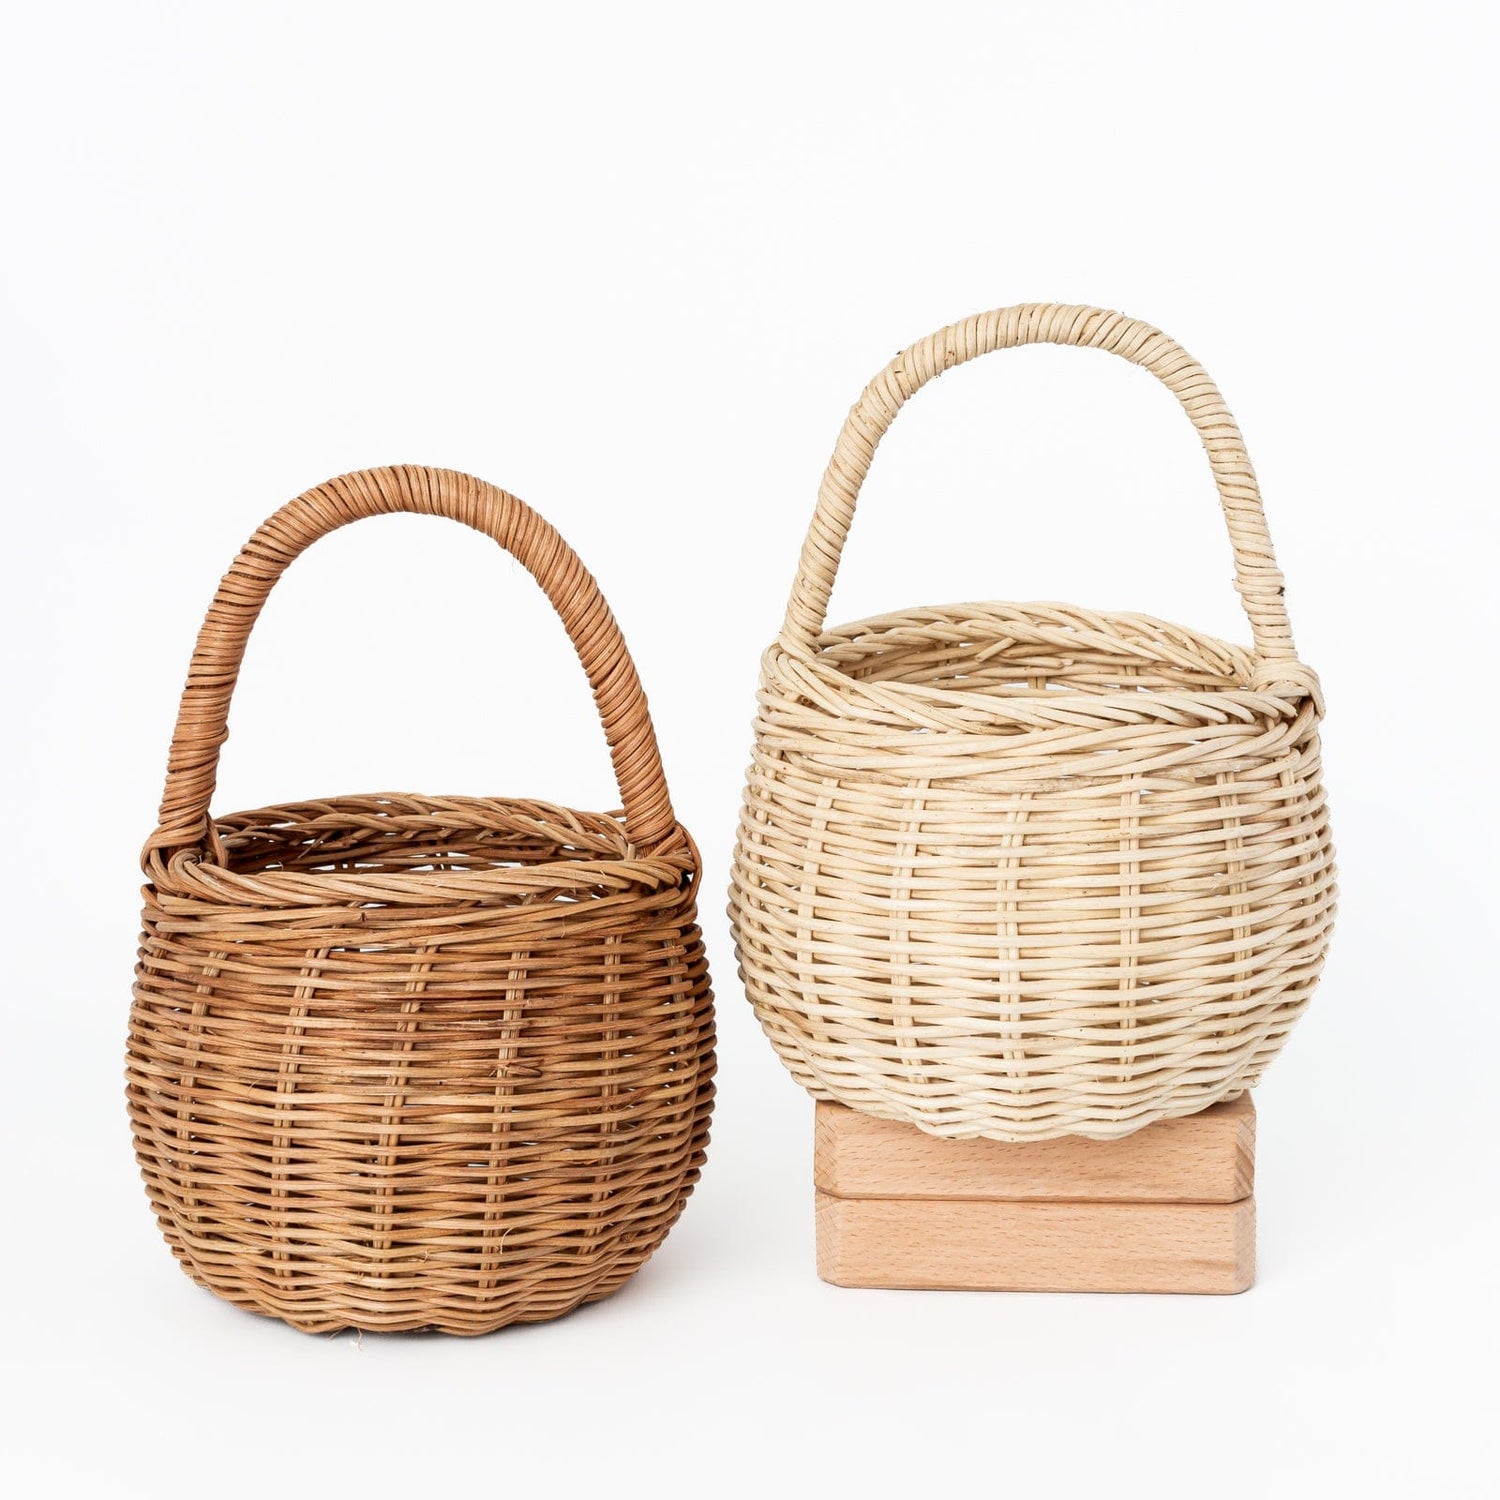 Olli Ella Rattan Rattan Berry Basket (Straw) by Olli Ella Olli Ella Rattan Berry Basket I Rattan Nursery Decor